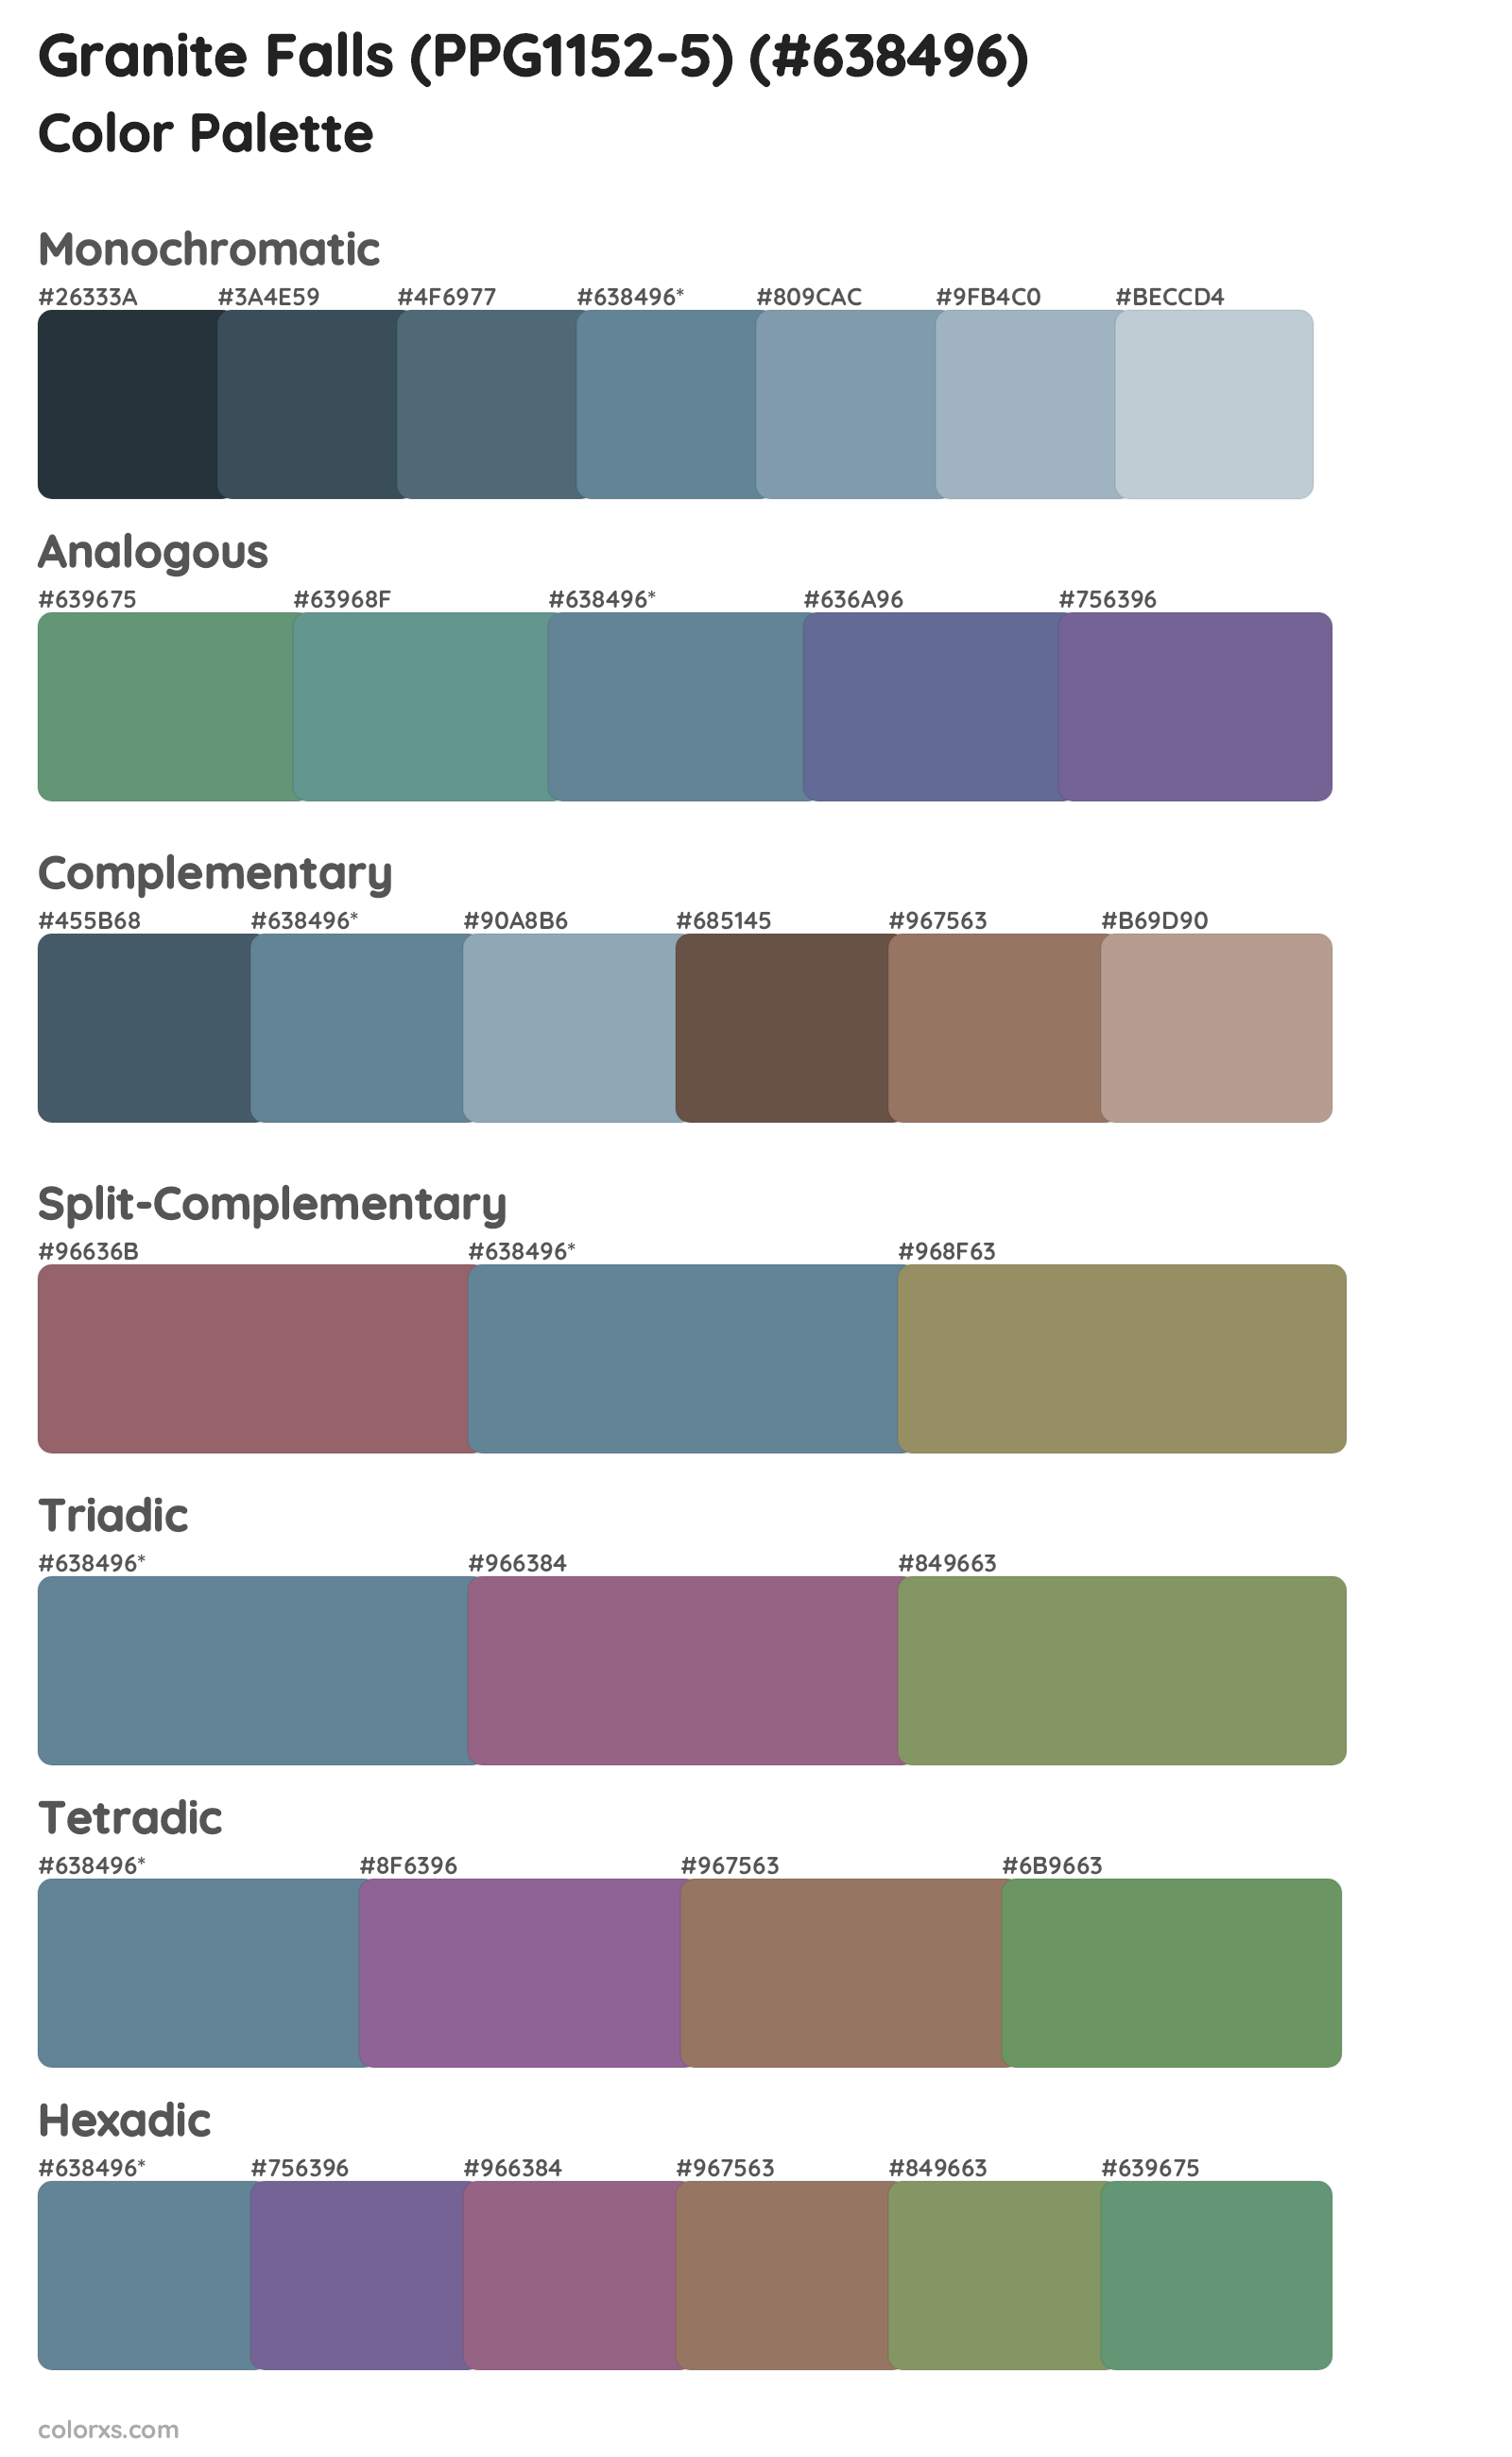 Granite Falls (PPG1152-5) Color Scheme Palettes